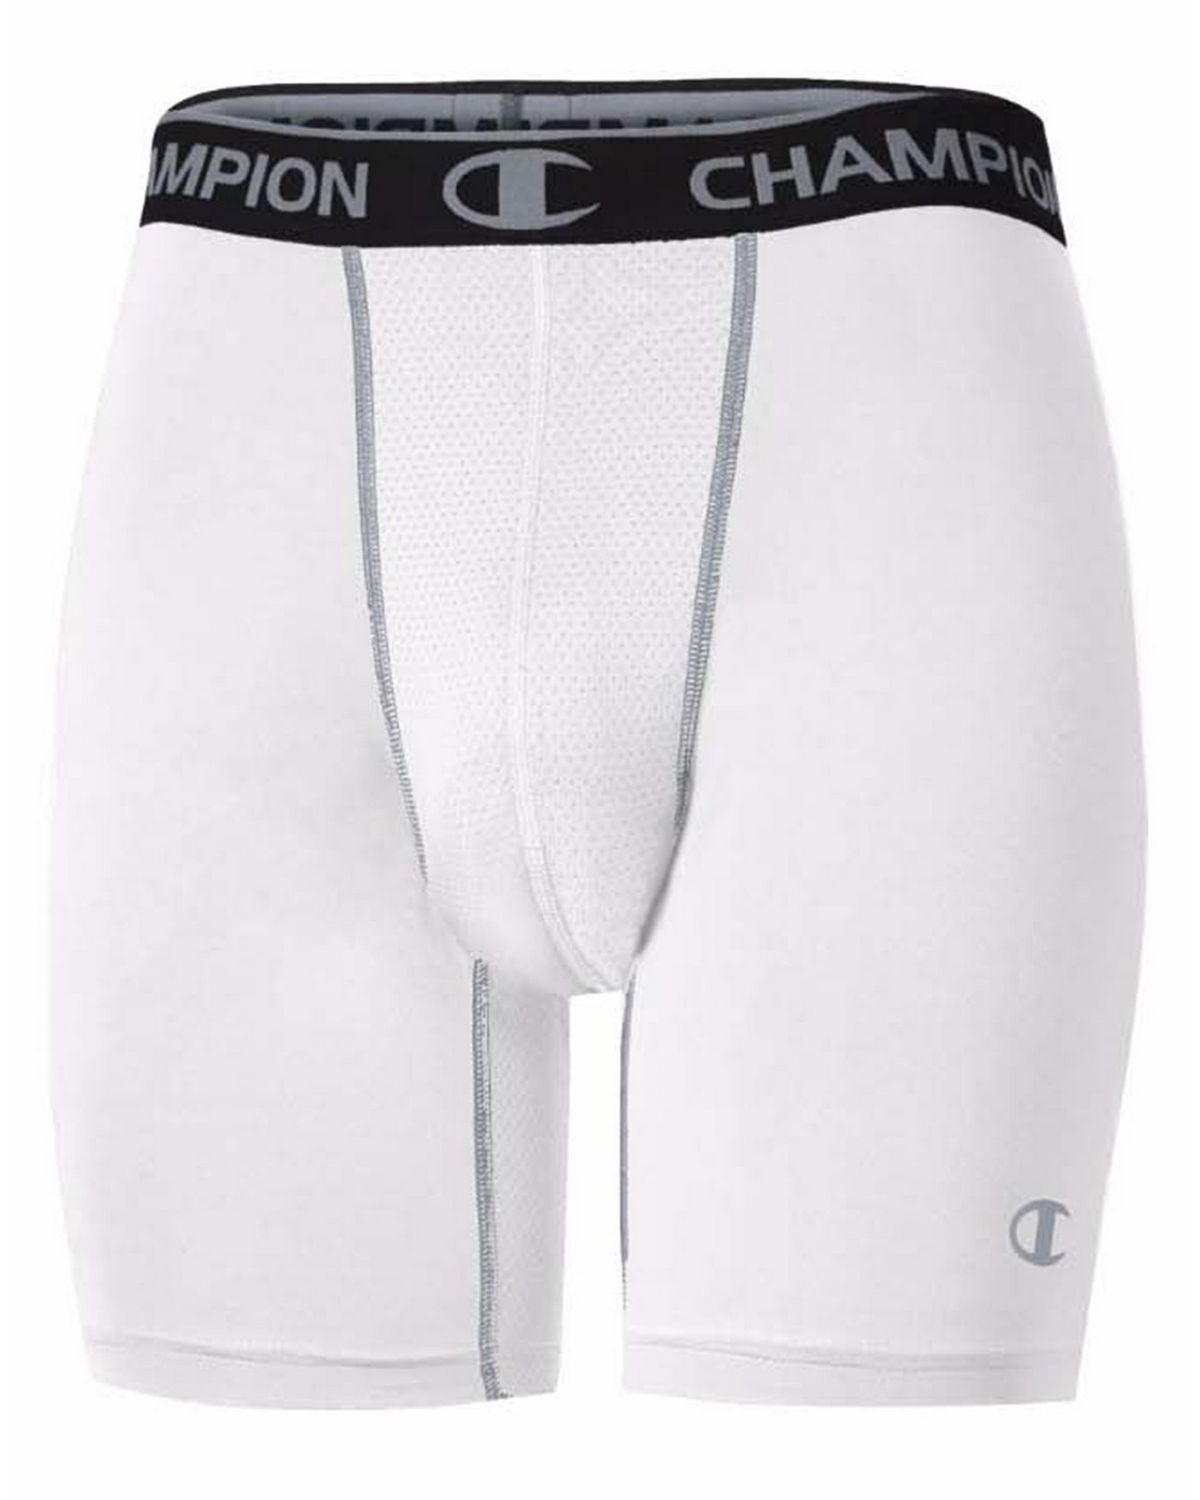 Champion Compression Pants Size Chart